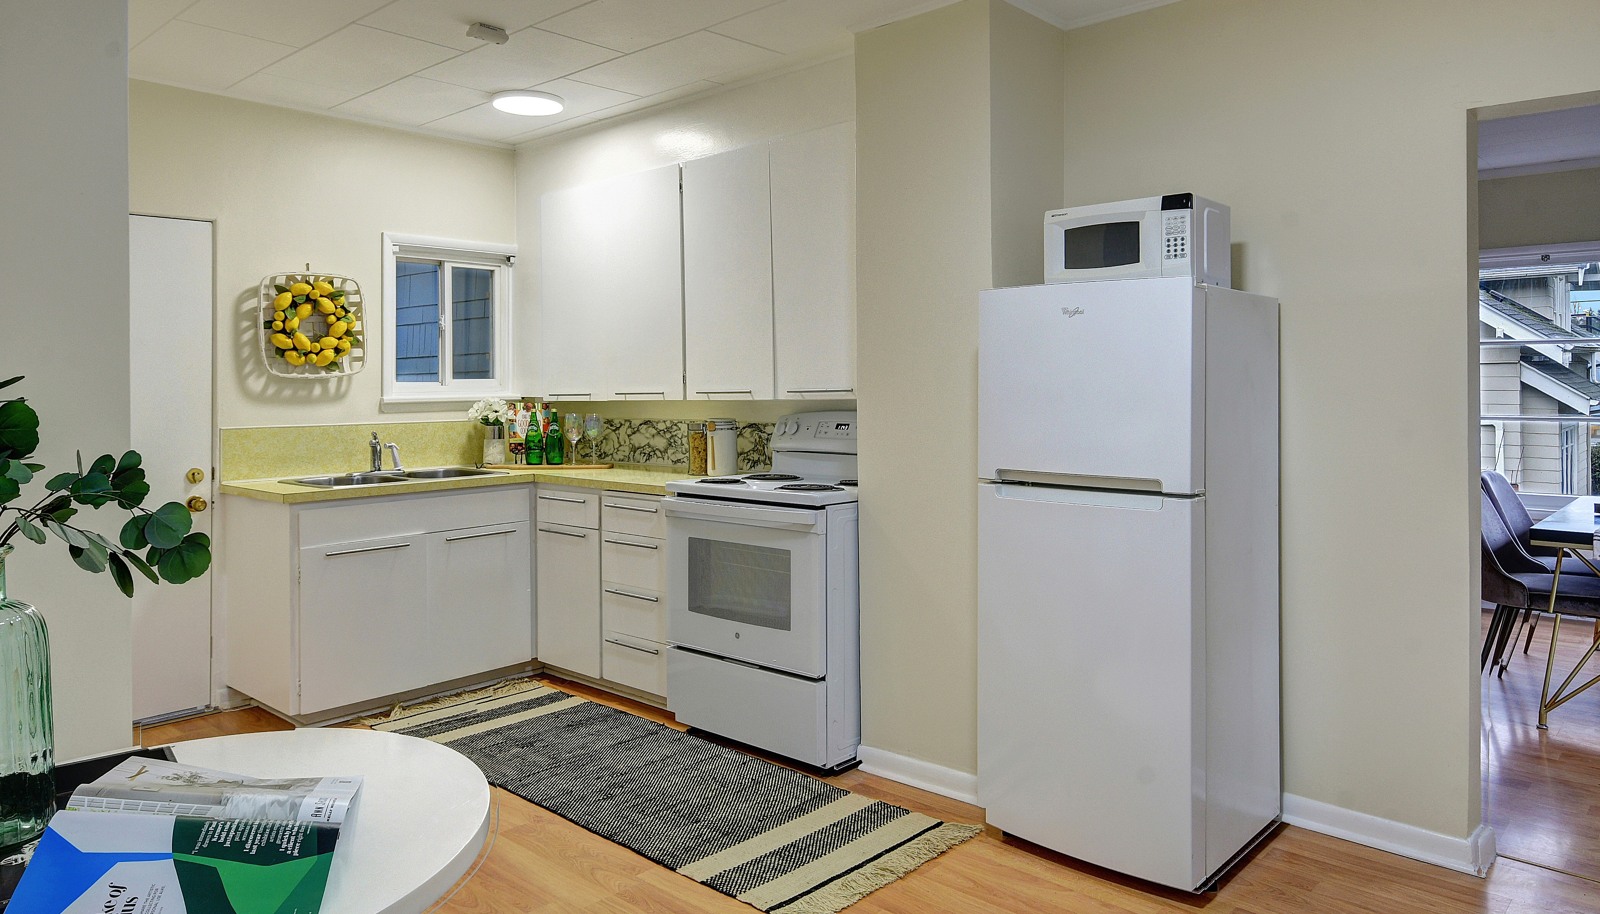 Upper unit kitchen/breakfast nook area